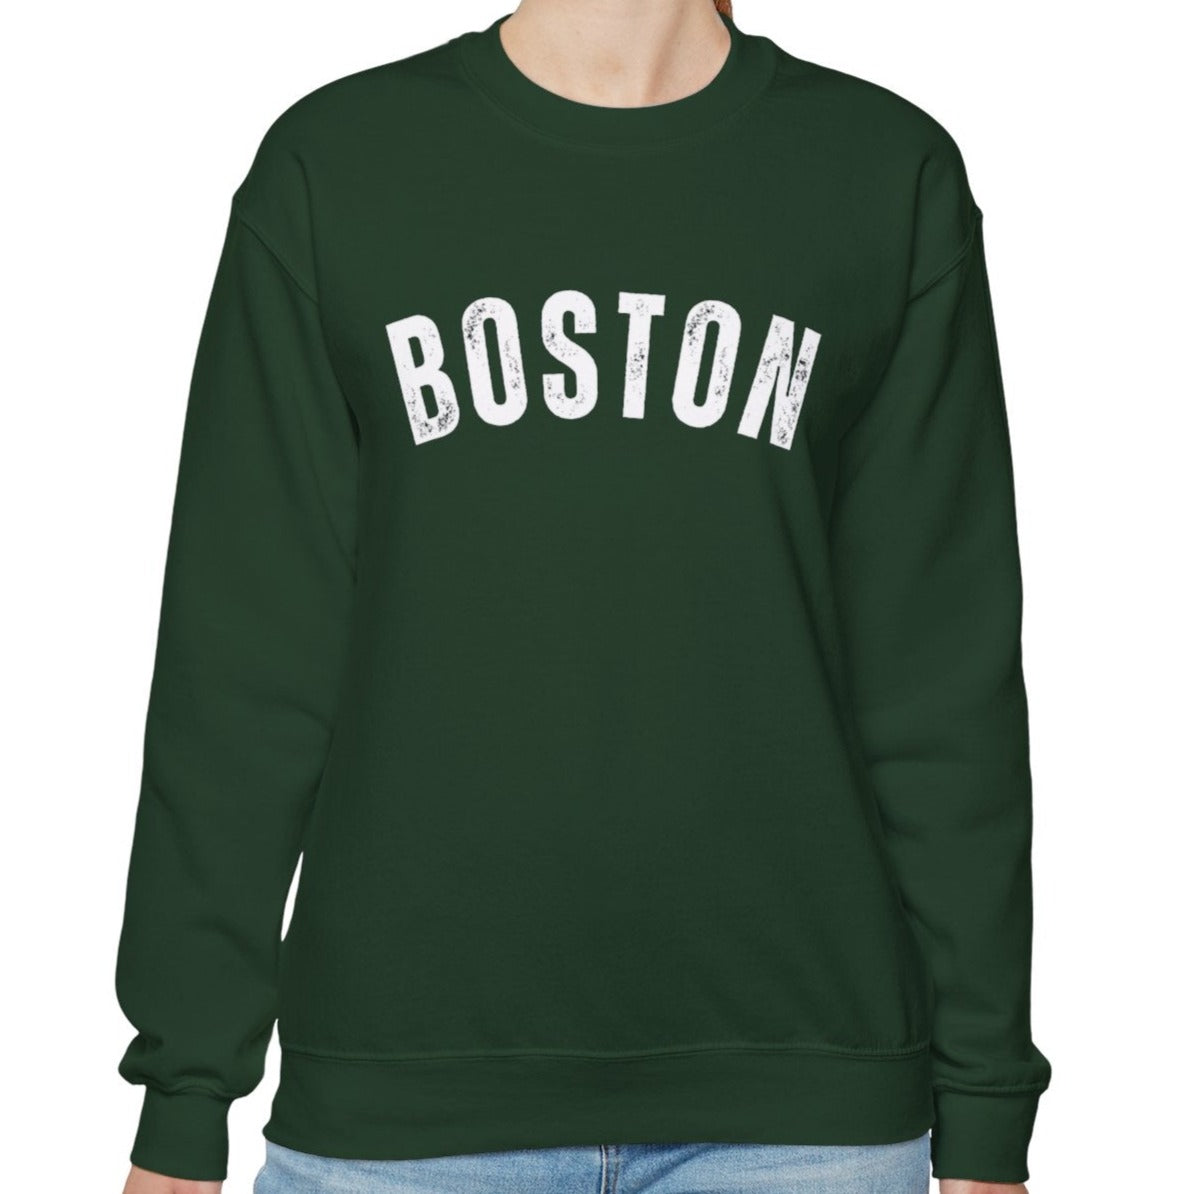 Boston Women's Sweatshirt - Eddy and Rita